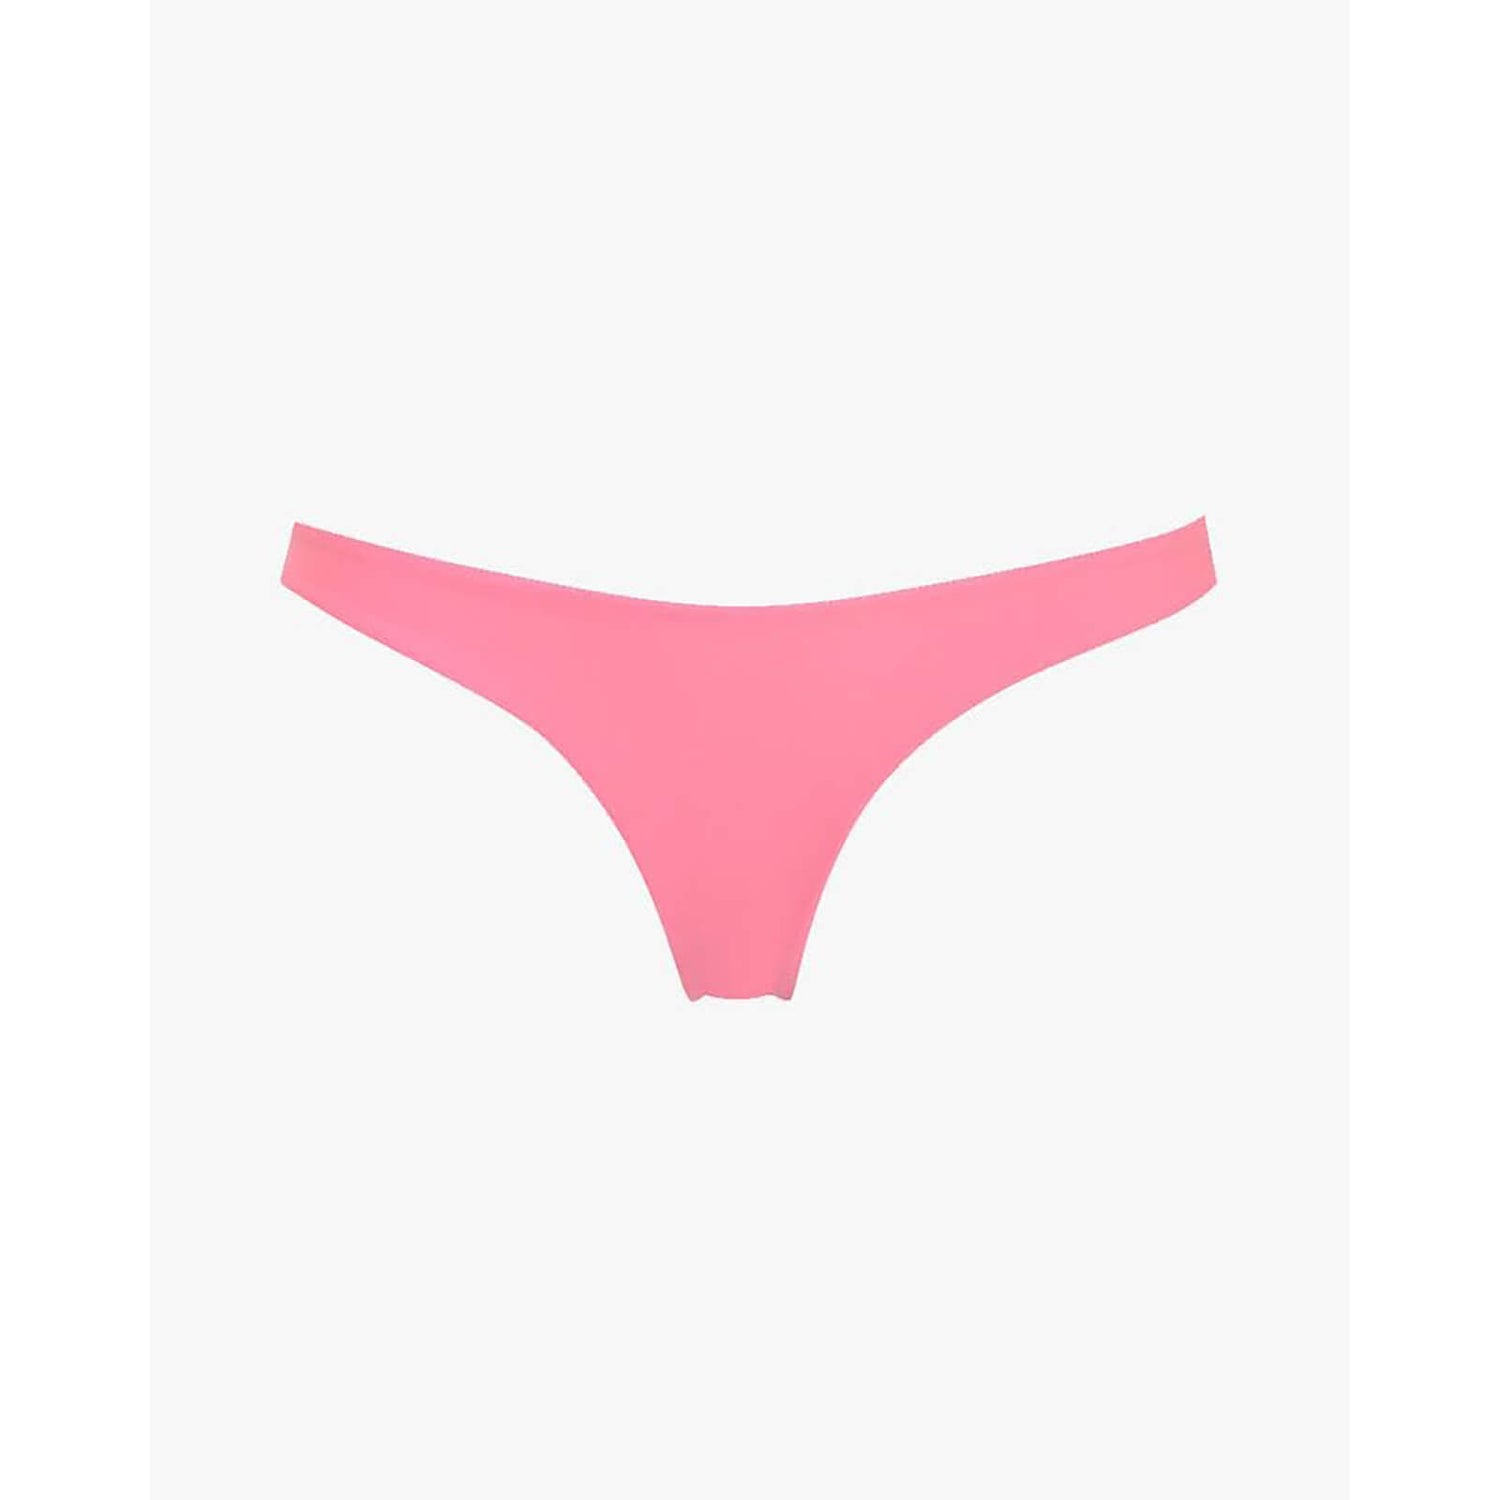 Les Girls Les Boys Tiny Bikini Bottoms - May Pink